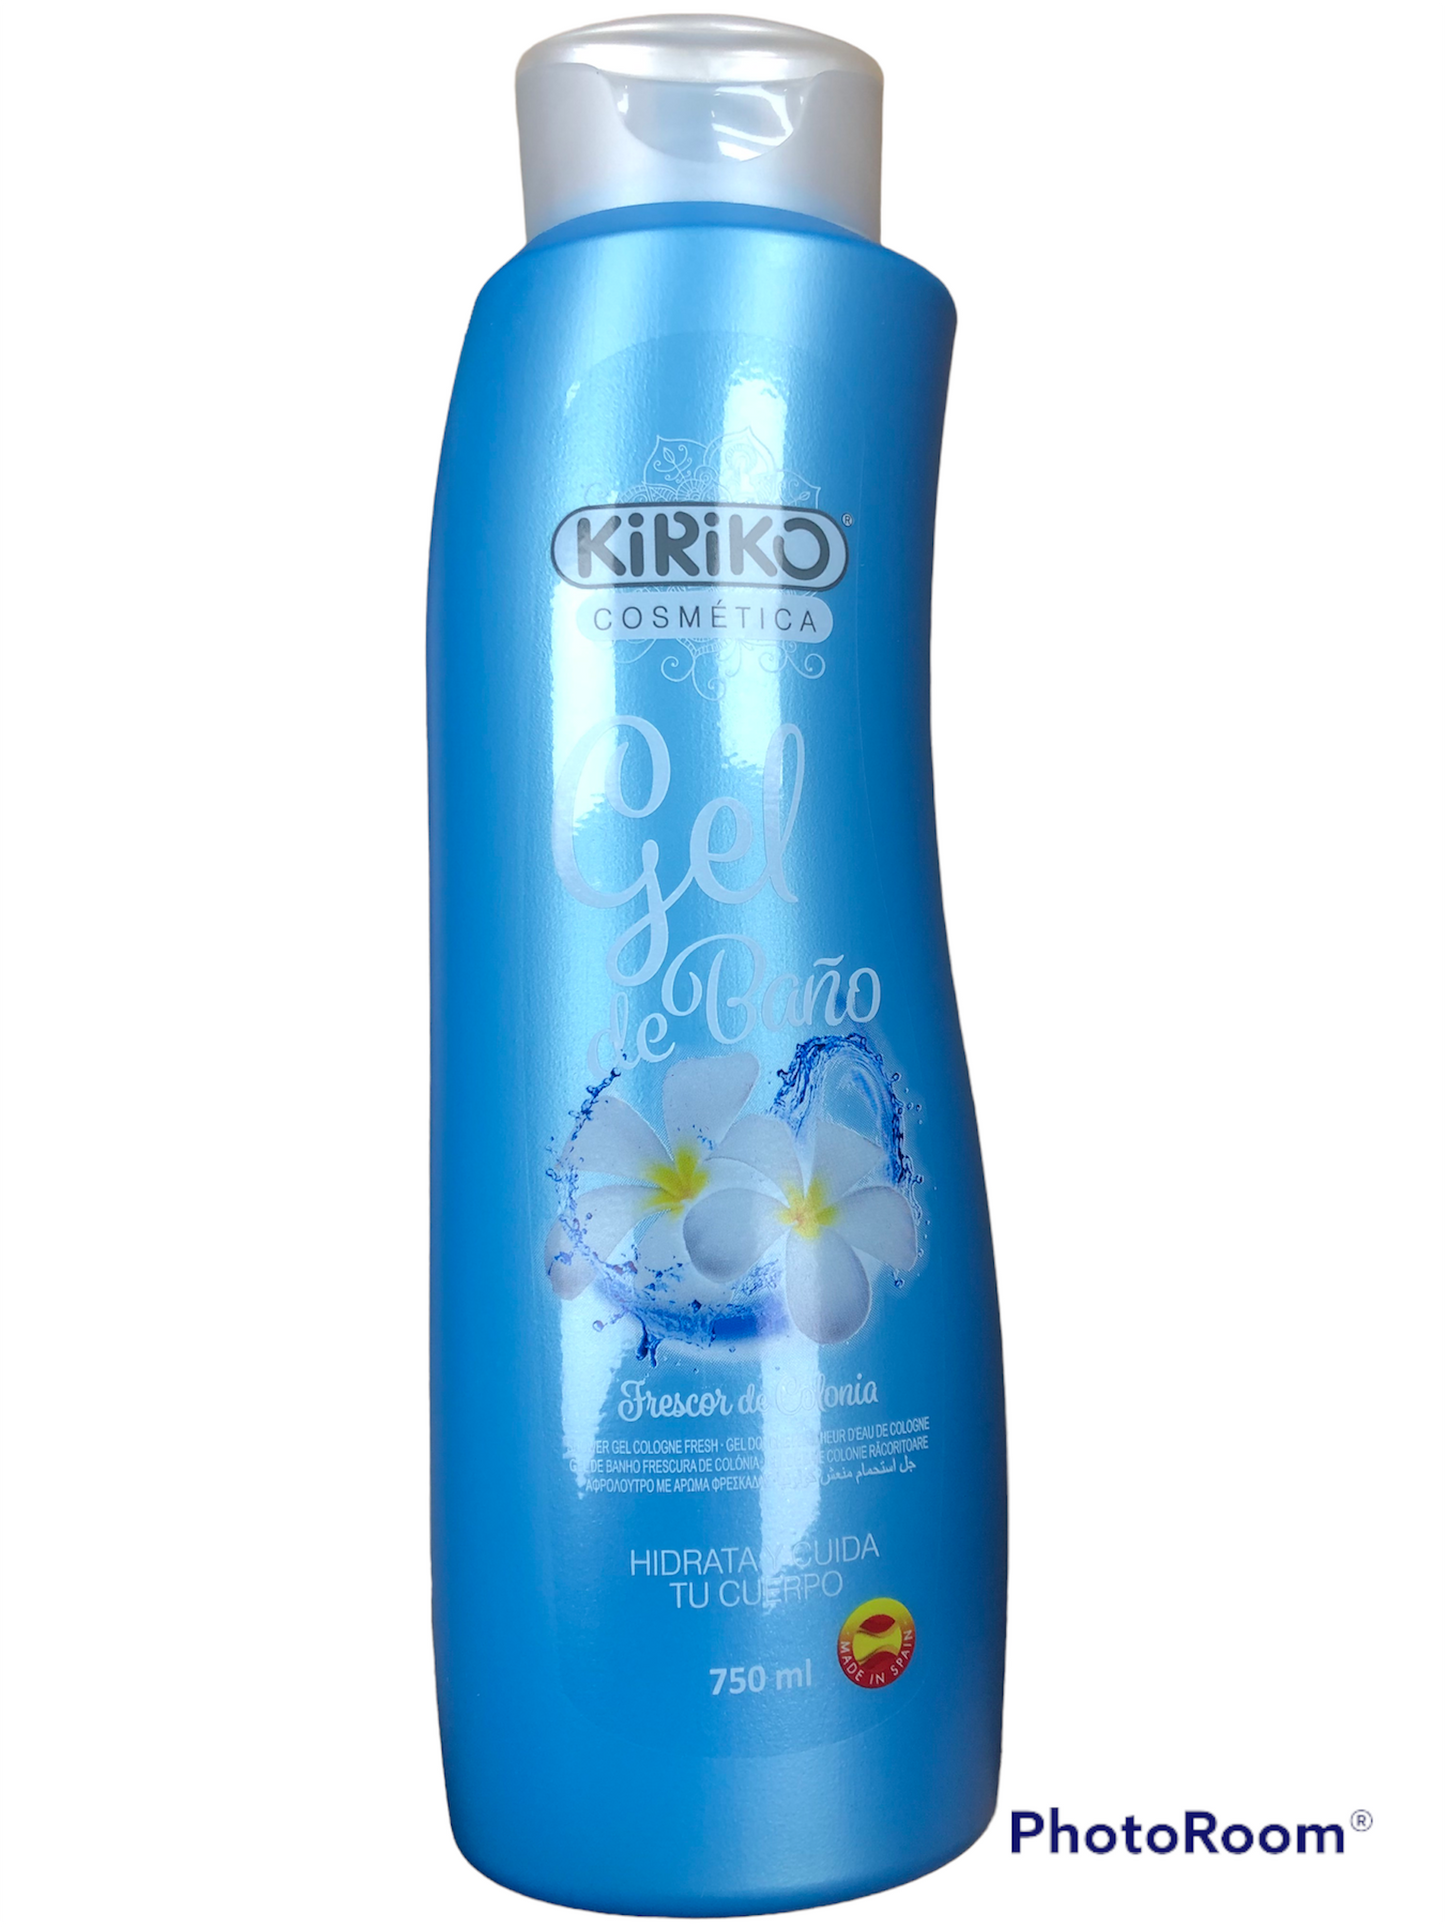 Kiriko colonia shower gel 750ml